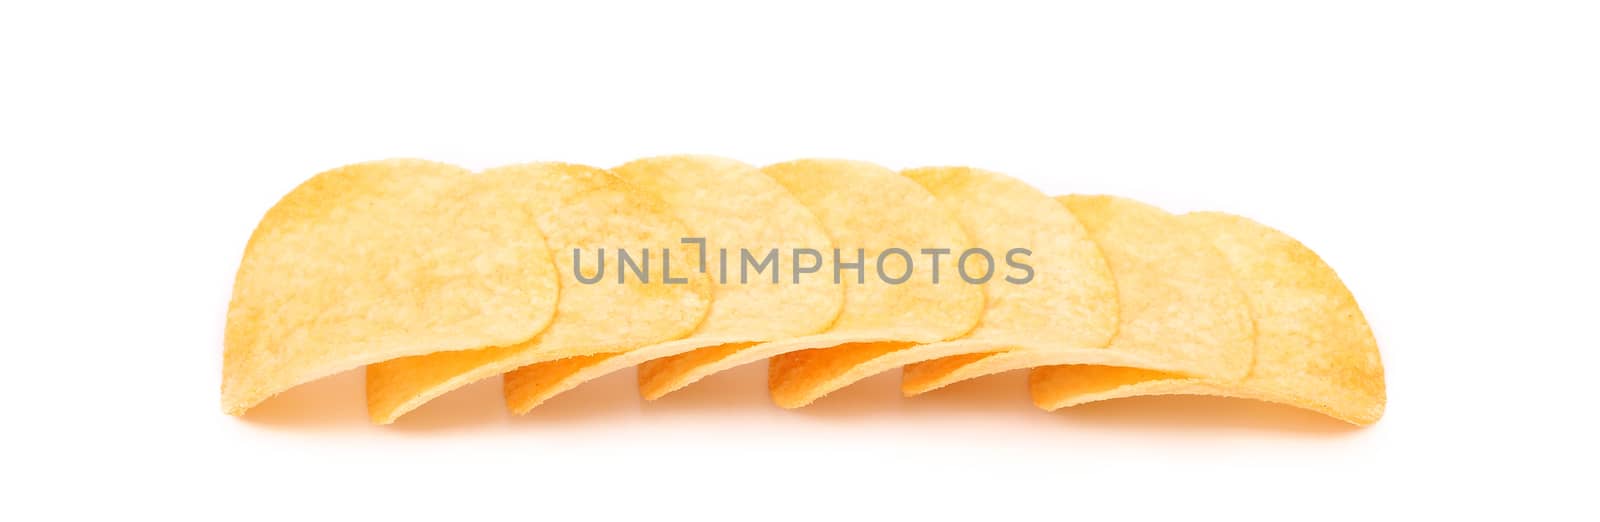 Row of potato chips. by indigolotos